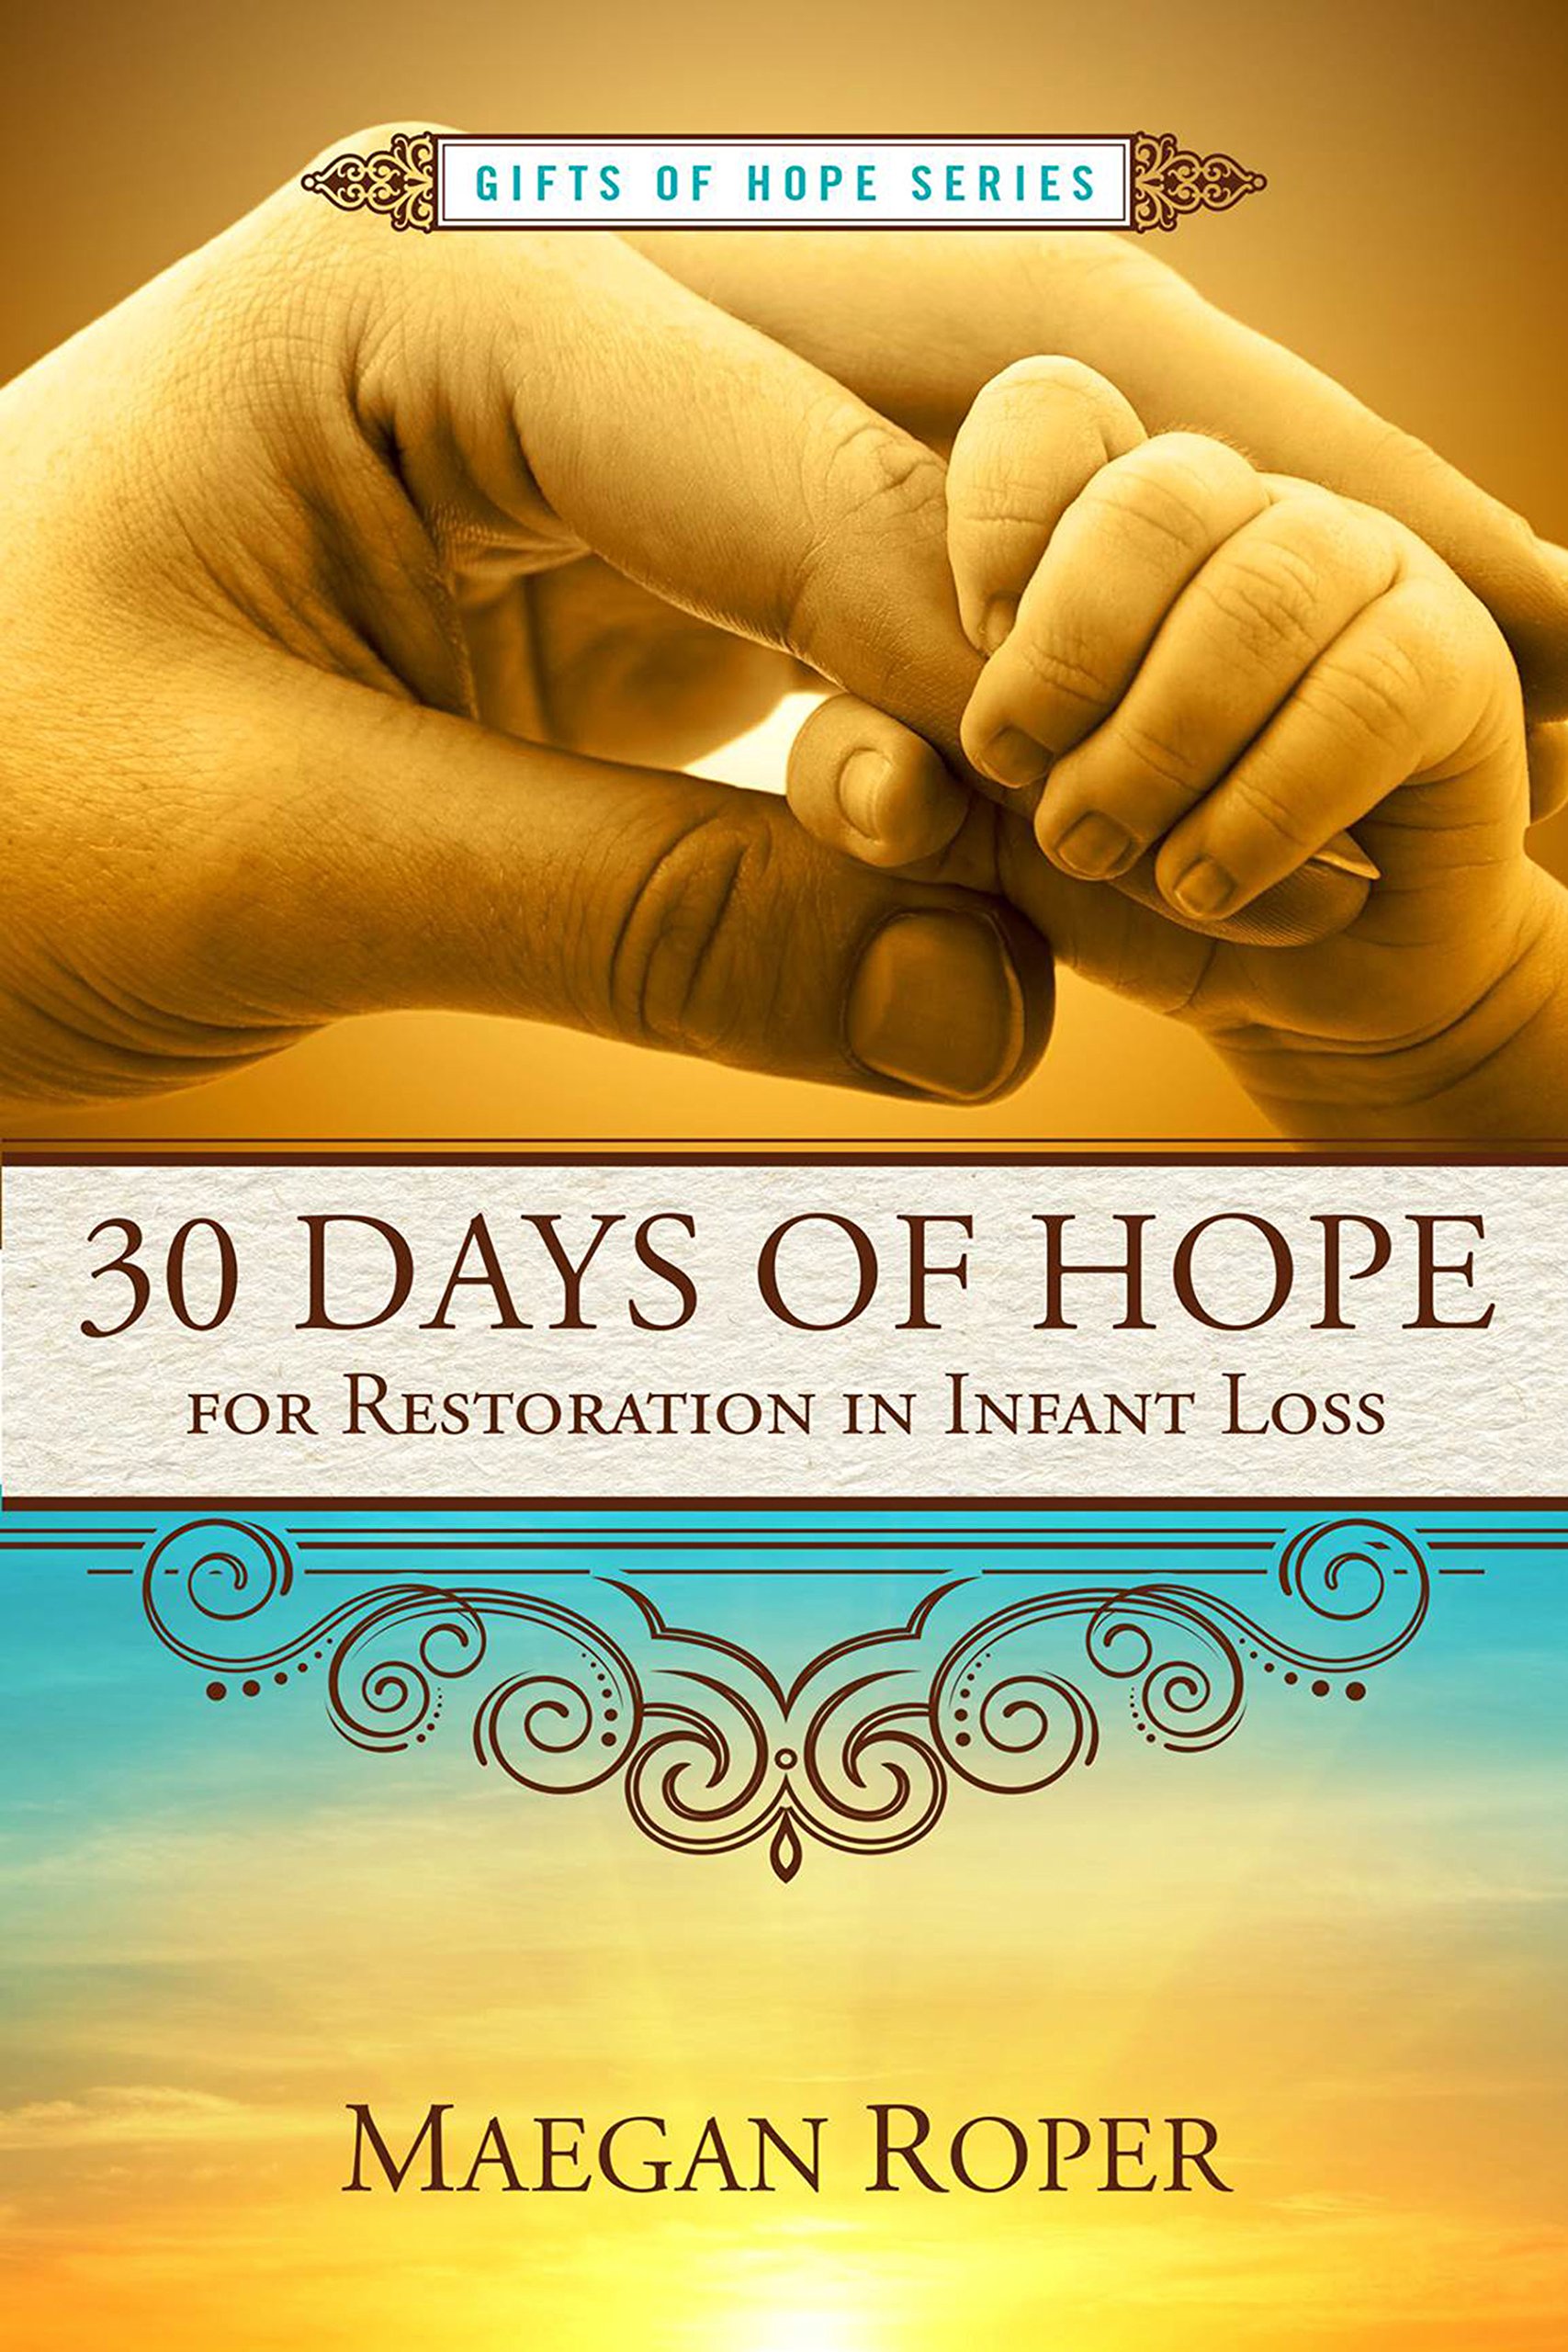 30 Days of Hope for Restoration in Infant Loss by Maegan Roper